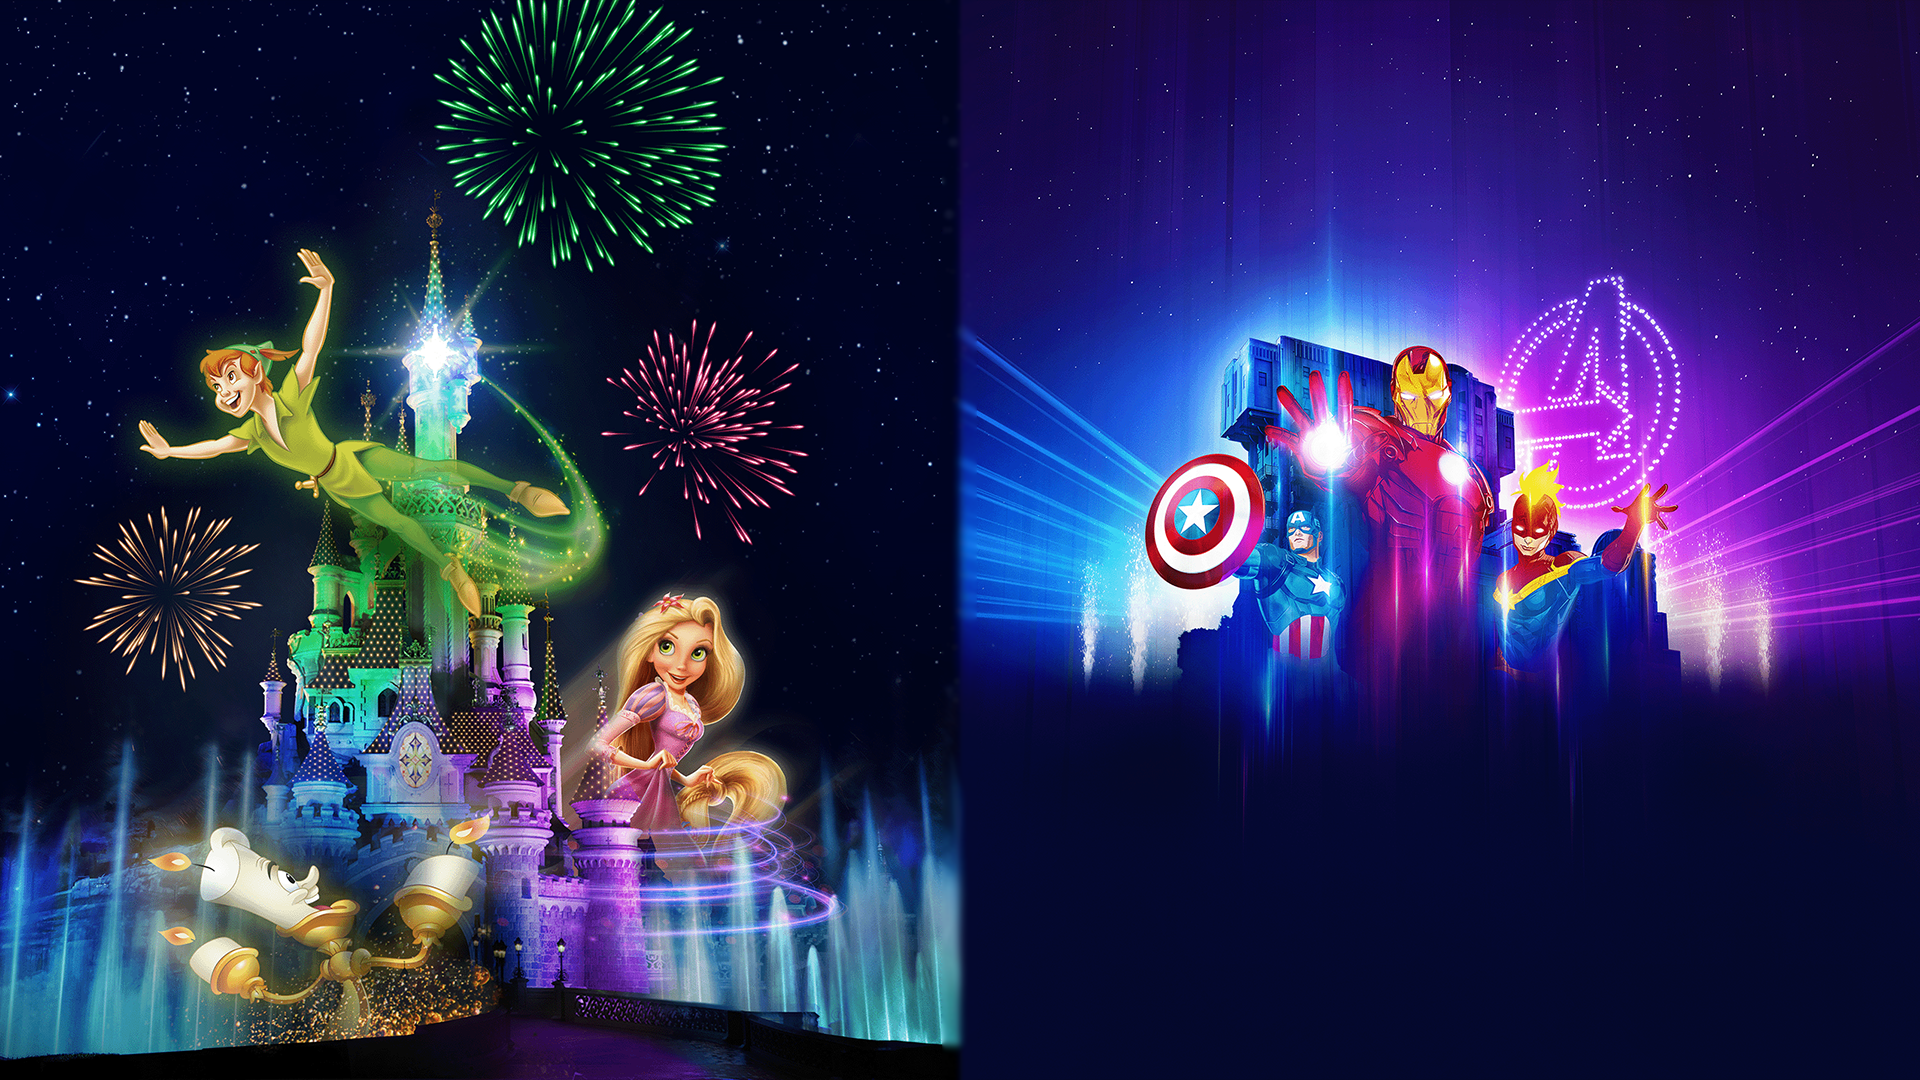 Disneyland Paris: Disney Dreams! Returns Alongside New Experiences For Grand Finale of 30th Anniversary